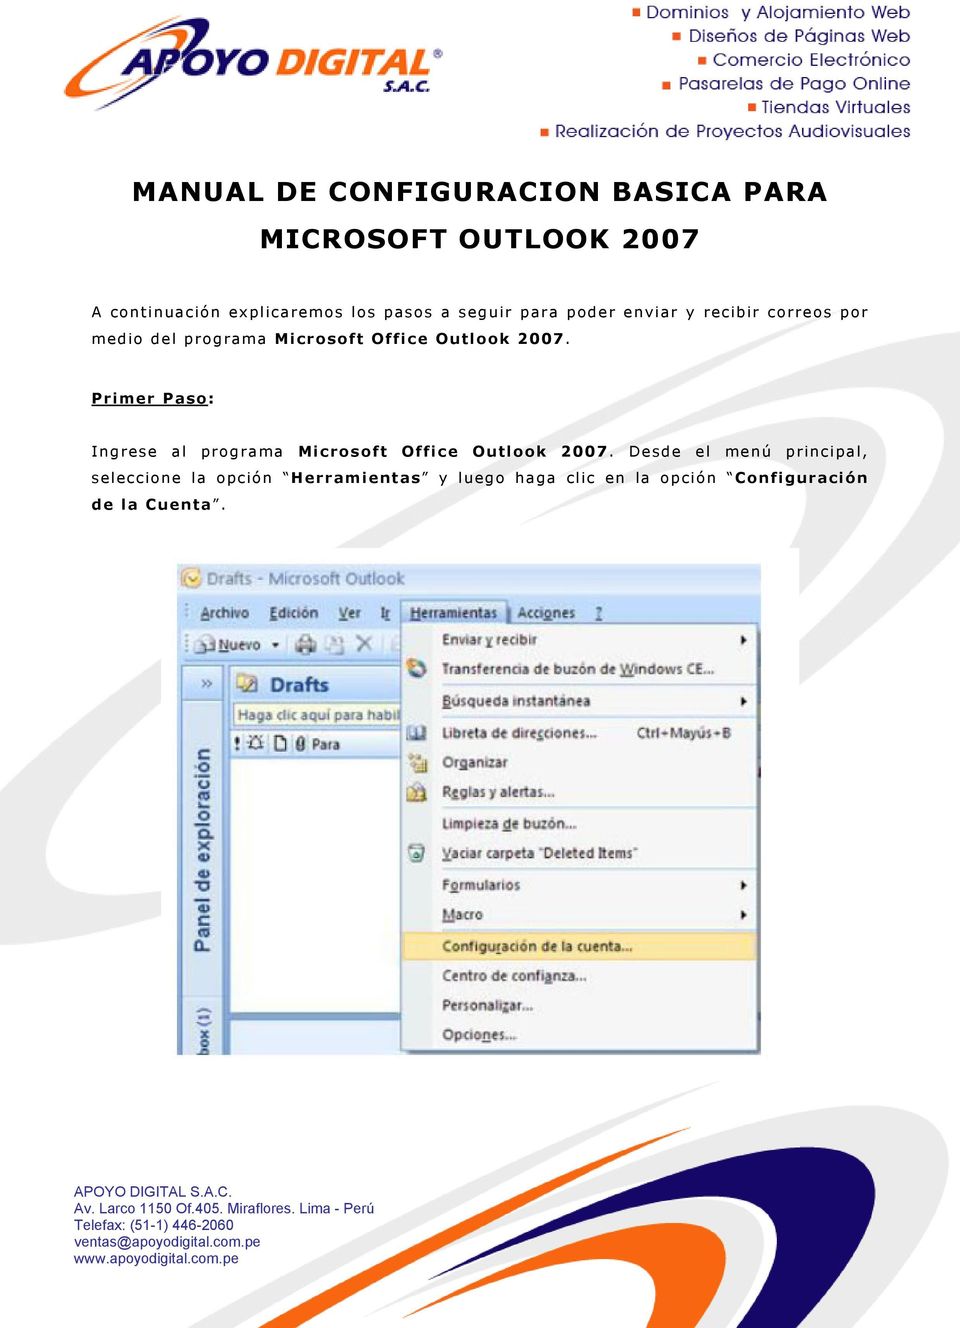 Outlook 2007. Primer Paso: Ingrese al programa Microsoft Office Outlook 2007.